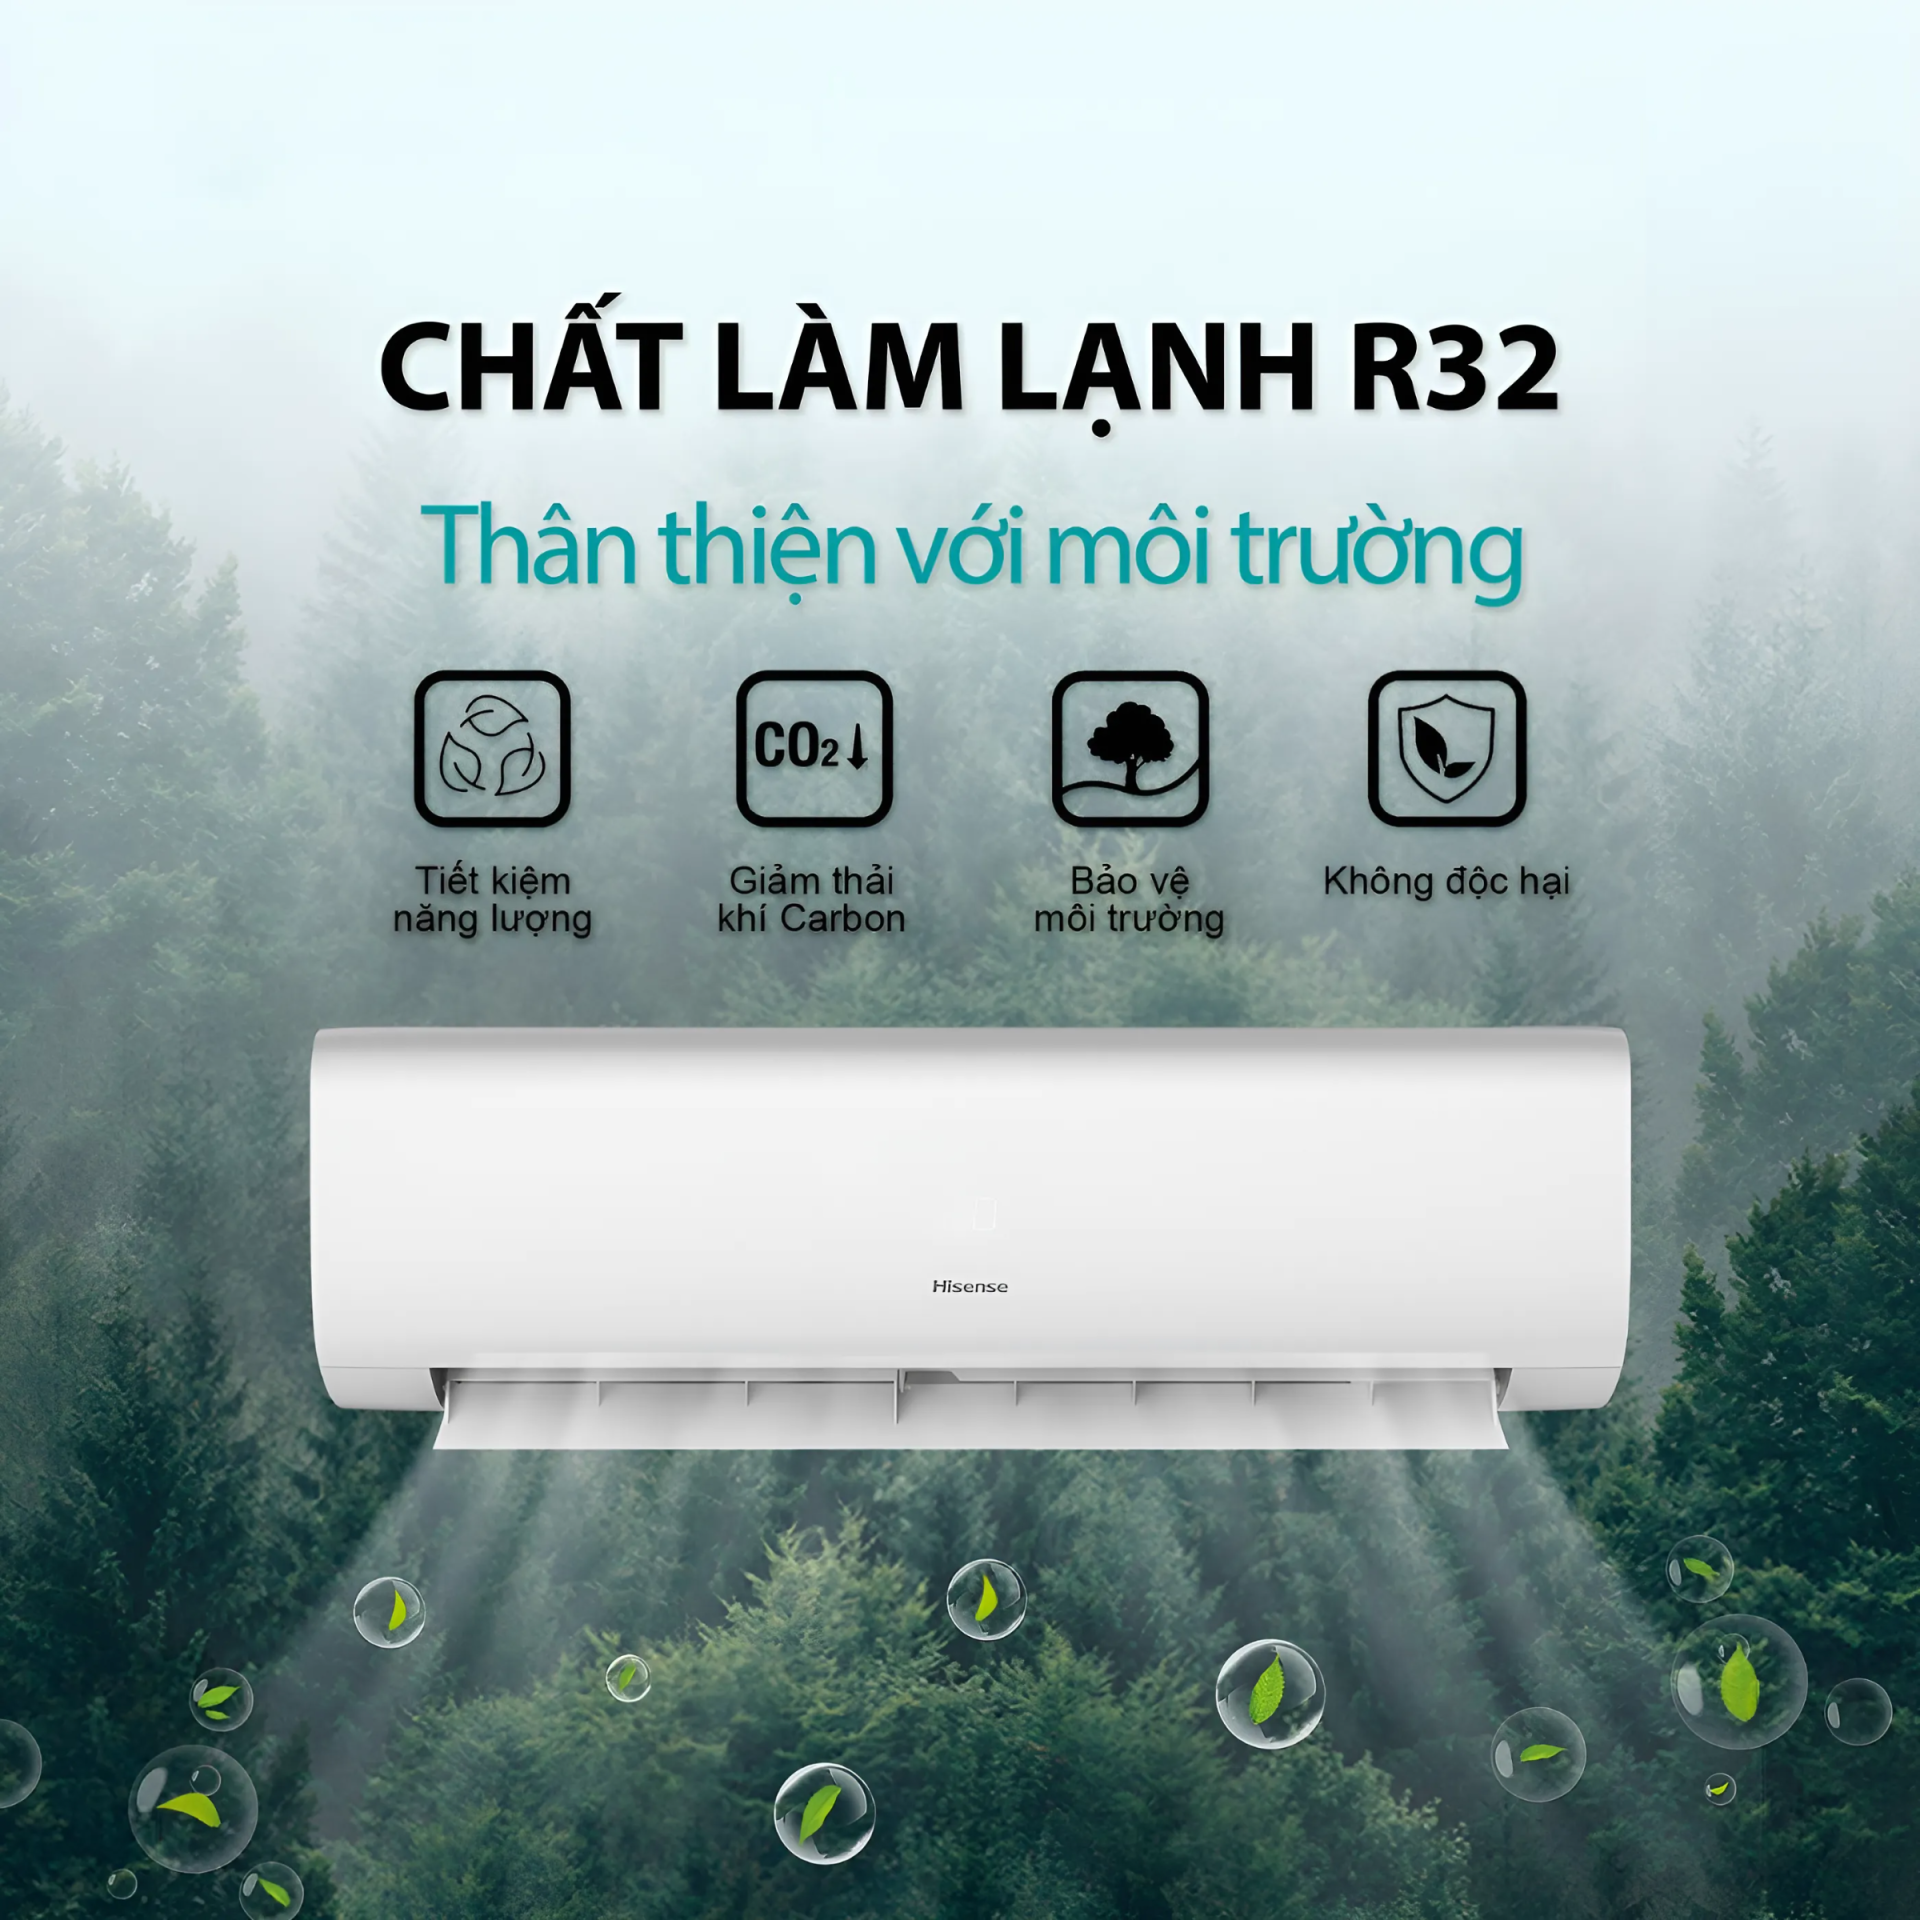 Chat-lam-lanh-R32-than-thien-tuyet-doi-voi-moi-truong